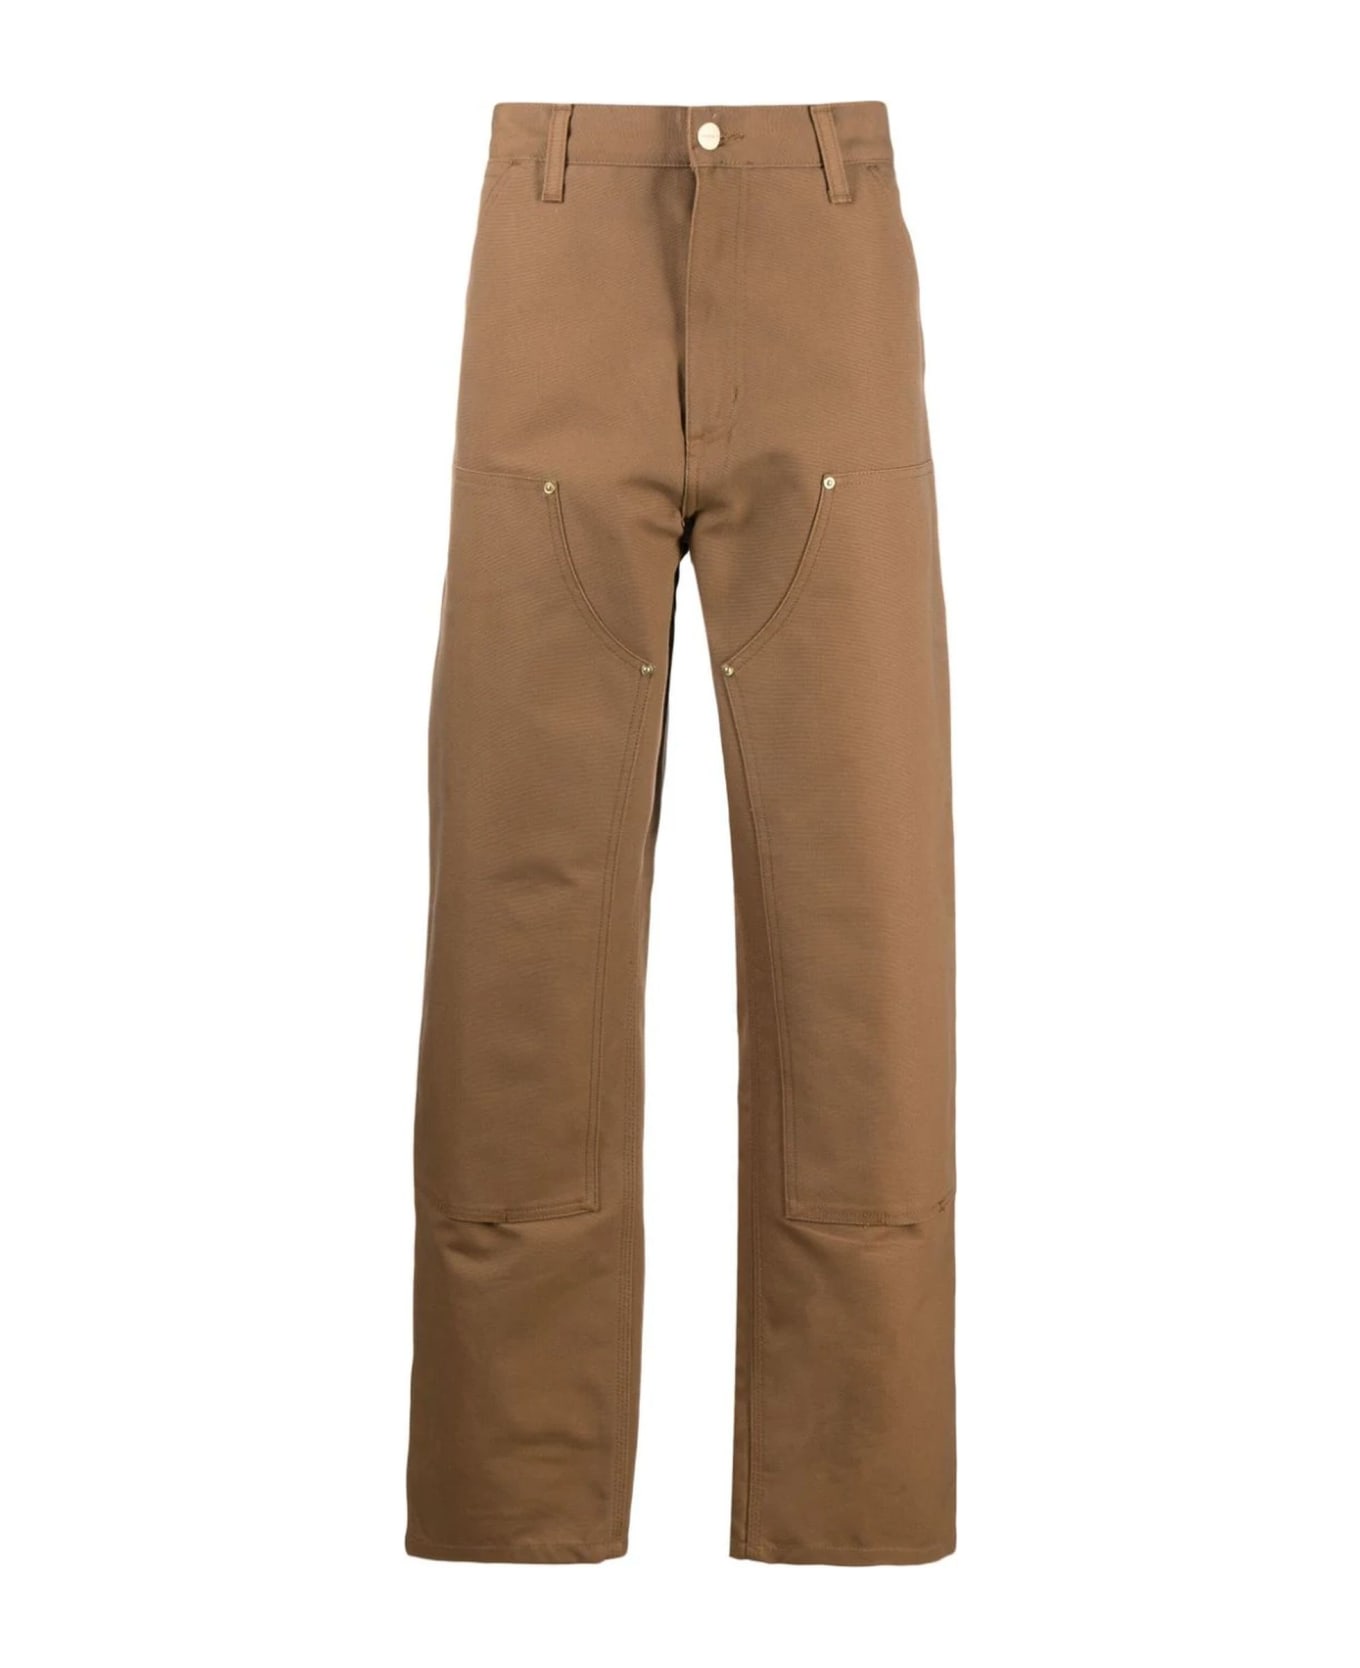 Carhartt Trousers Brown - Brown